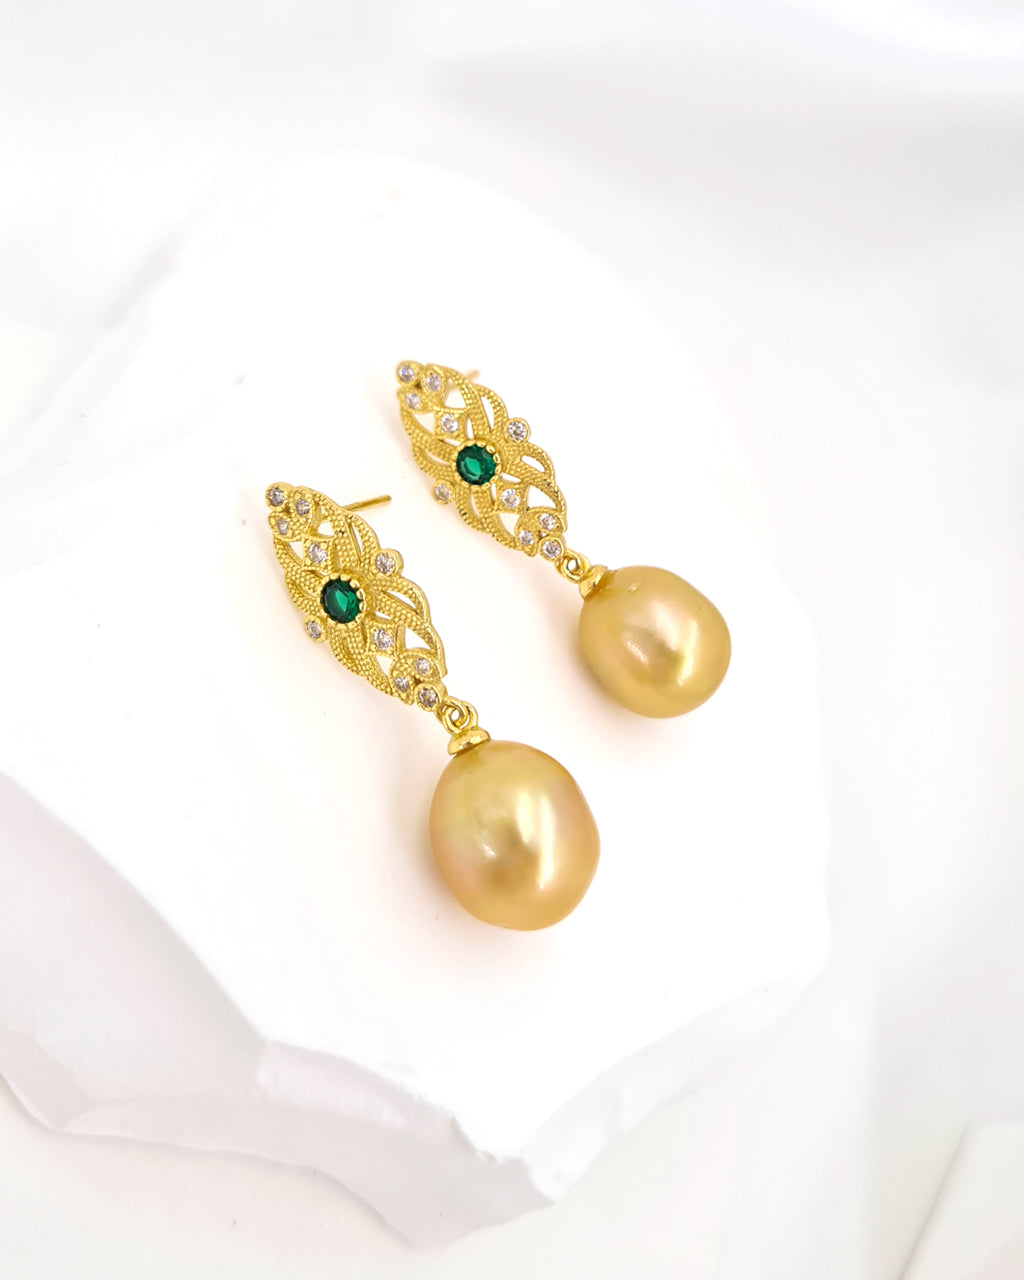 South Sea Pearl Earrings - Vintage Filigree Handmade Pearl Jewelry from Singapore